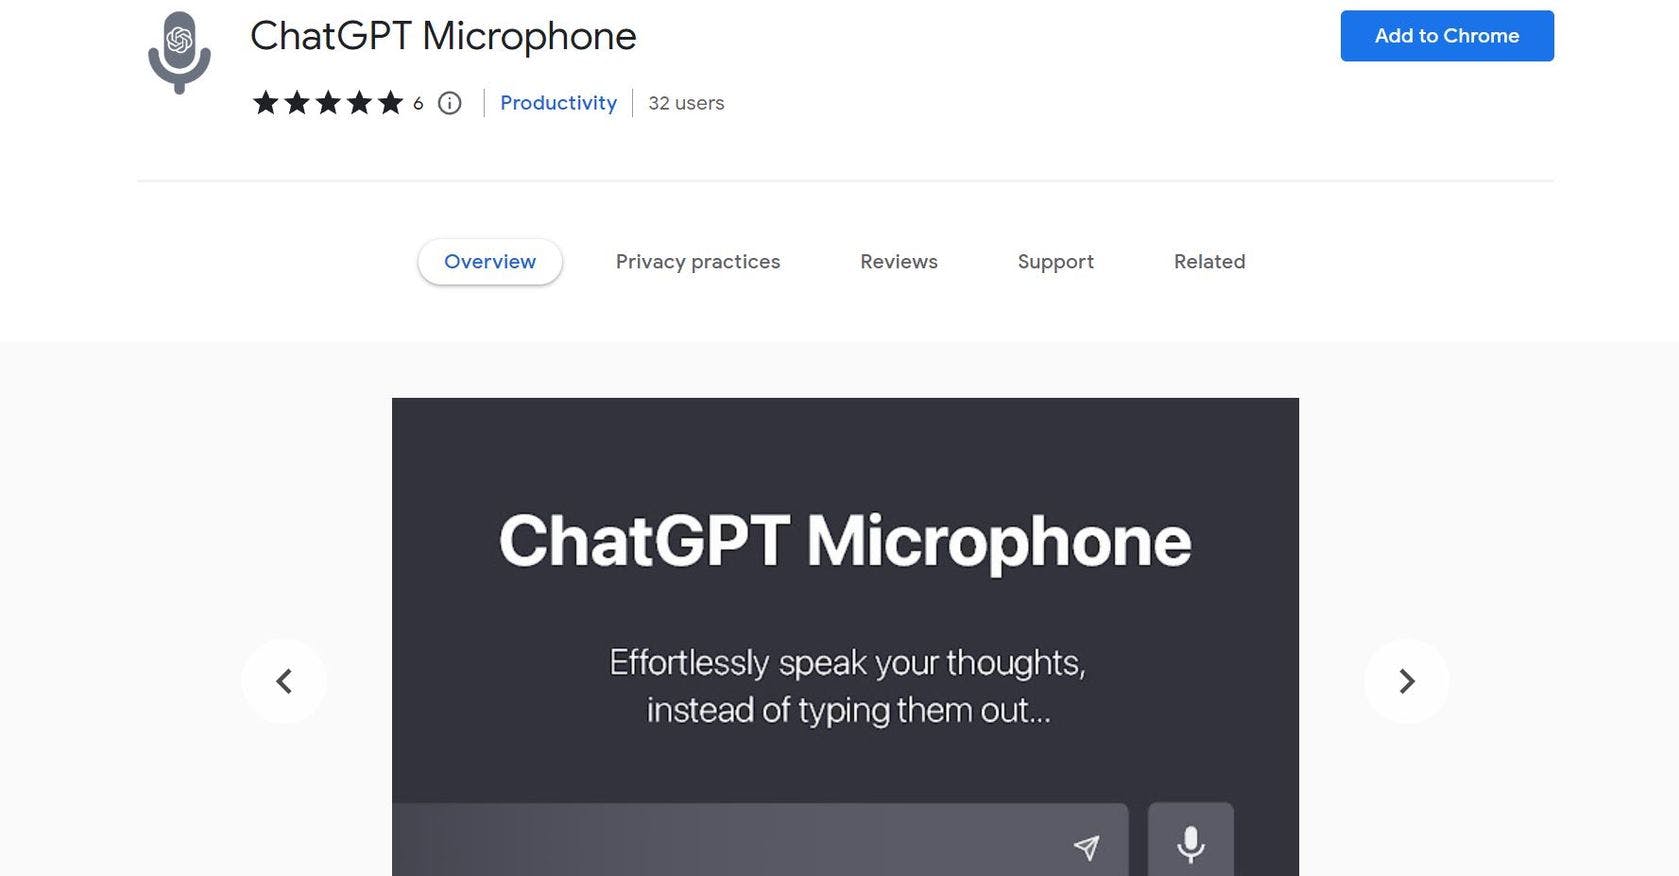 ThemotherAI - ChatGPT Microphone